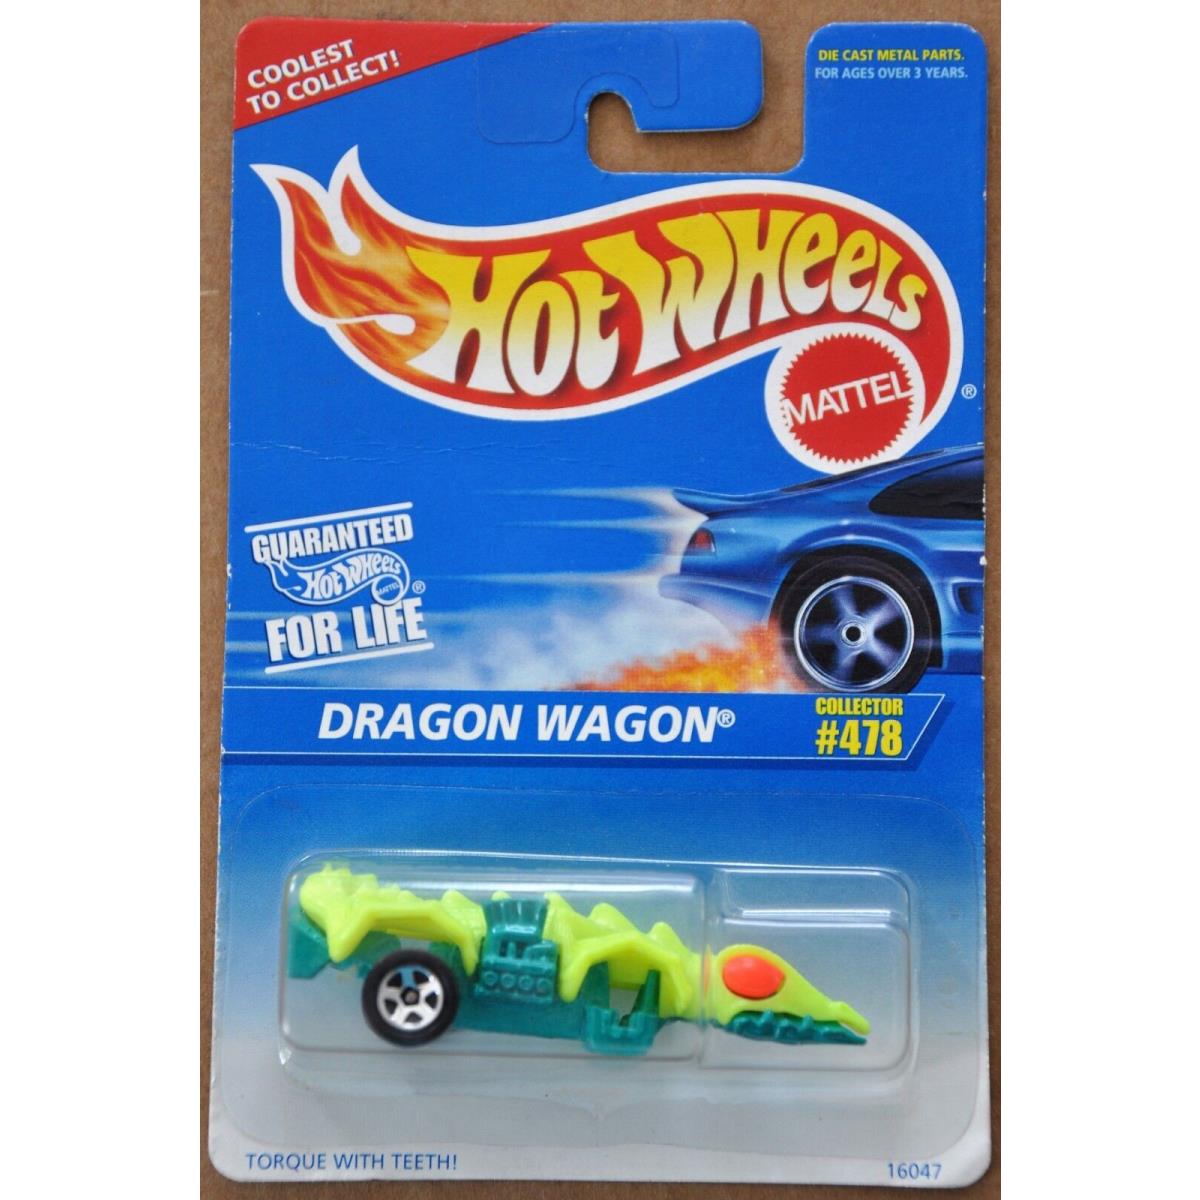 1996 Hot Wheels Dragon Wagon Collector 478 Error Missing Wheels